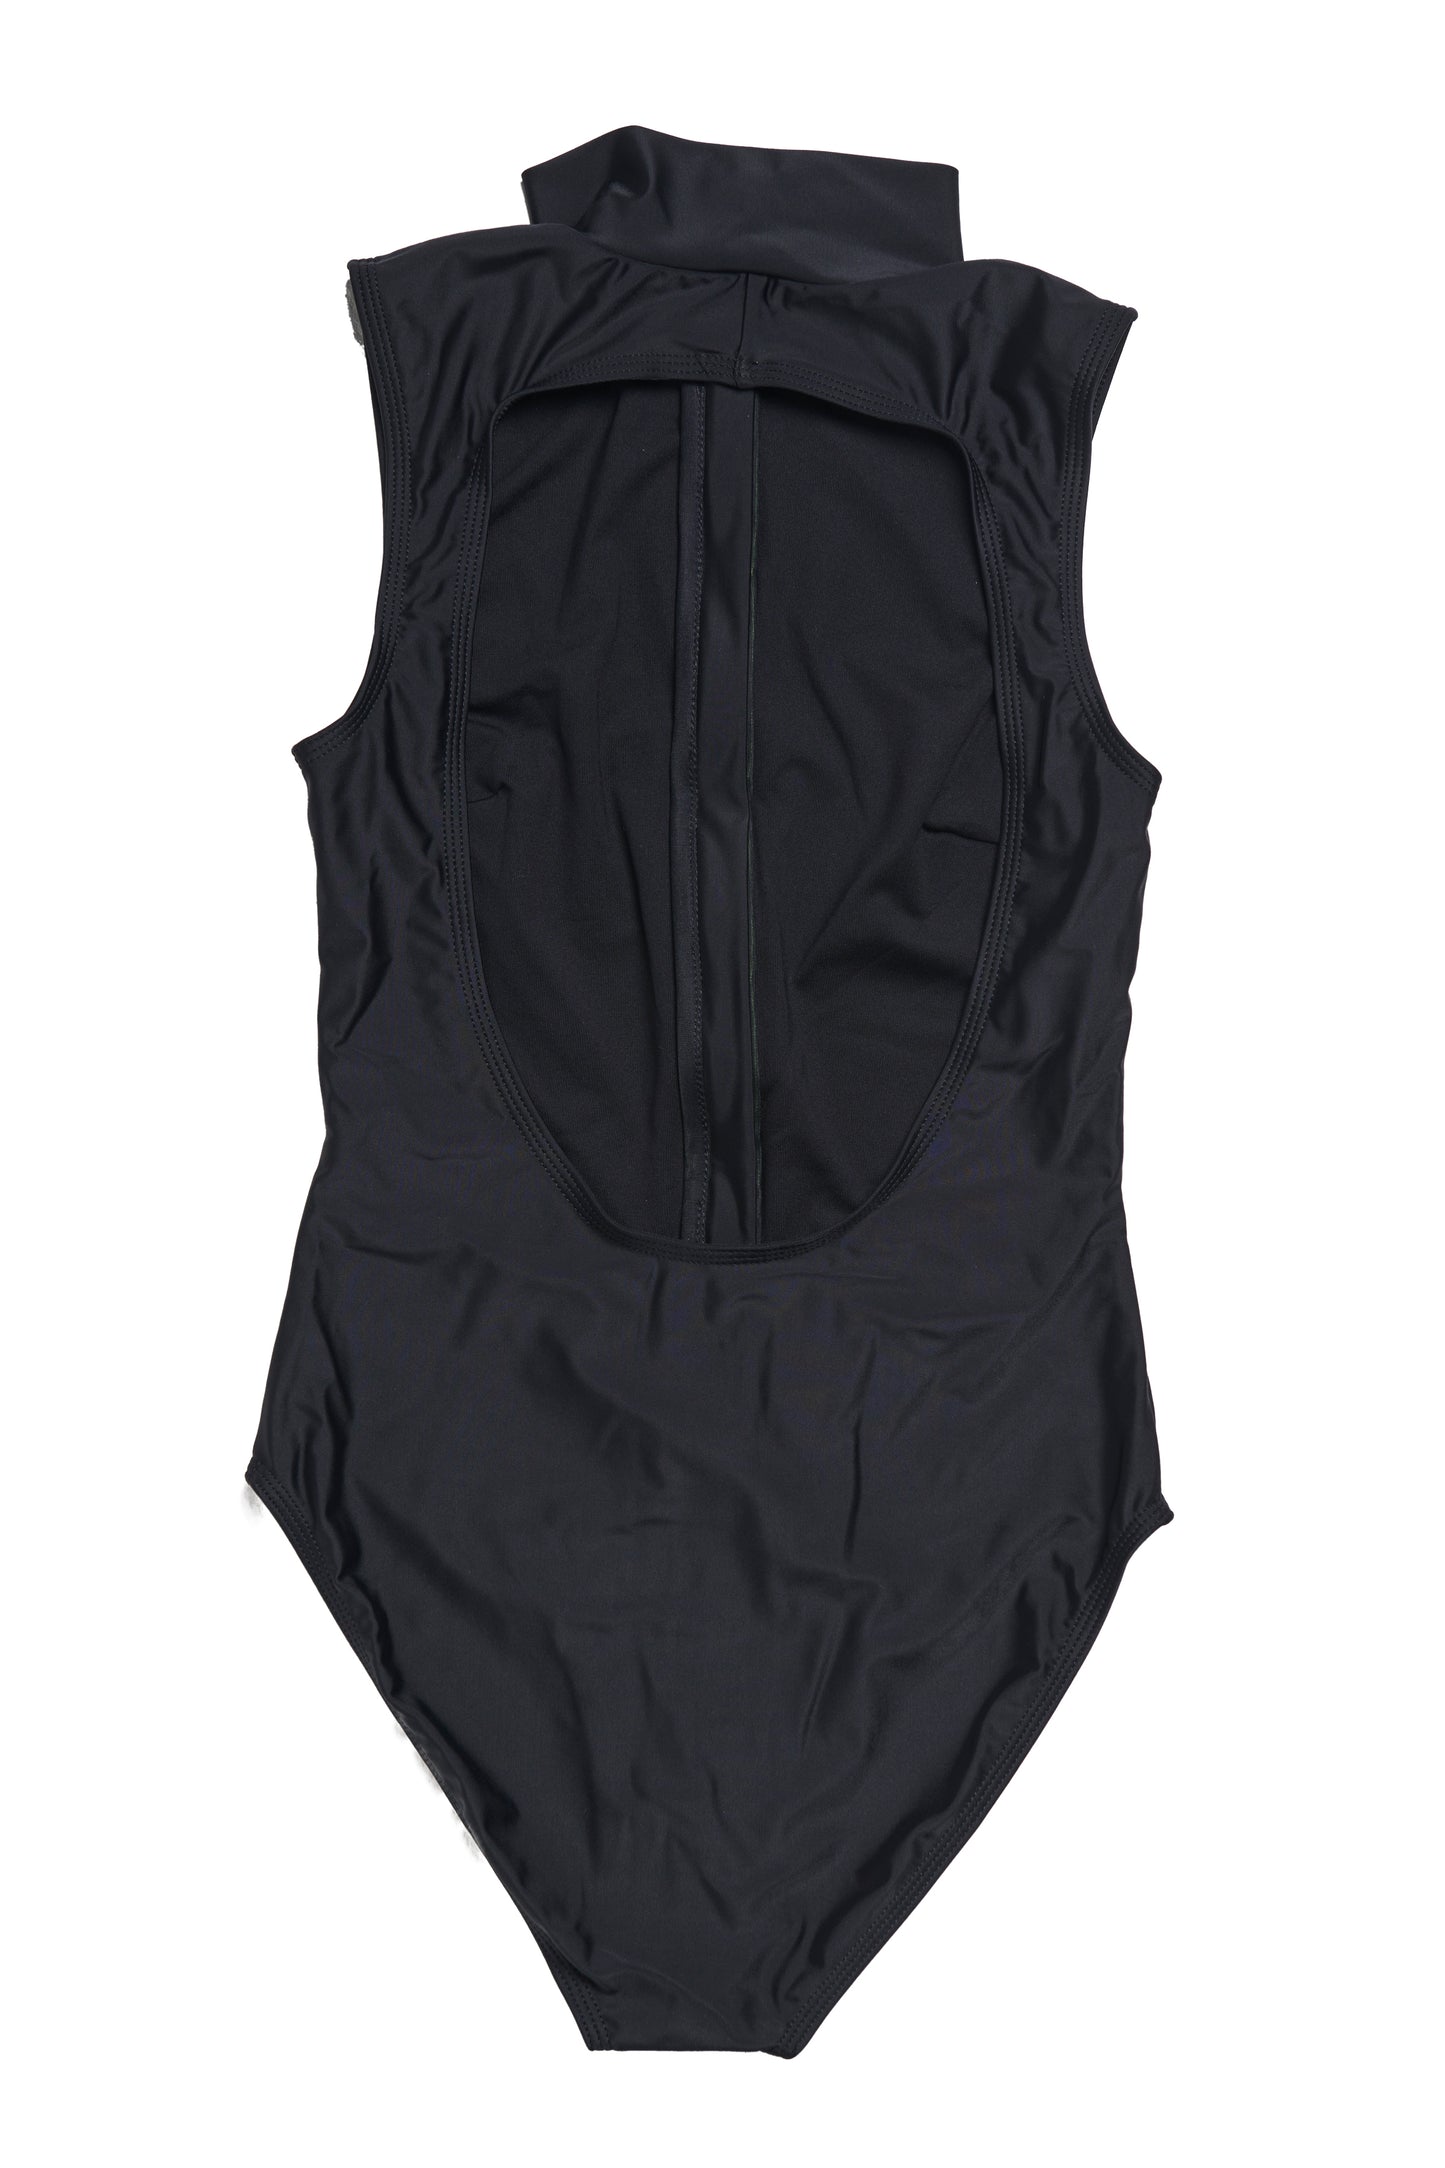 Zipper swimsuit - black with neon zipper